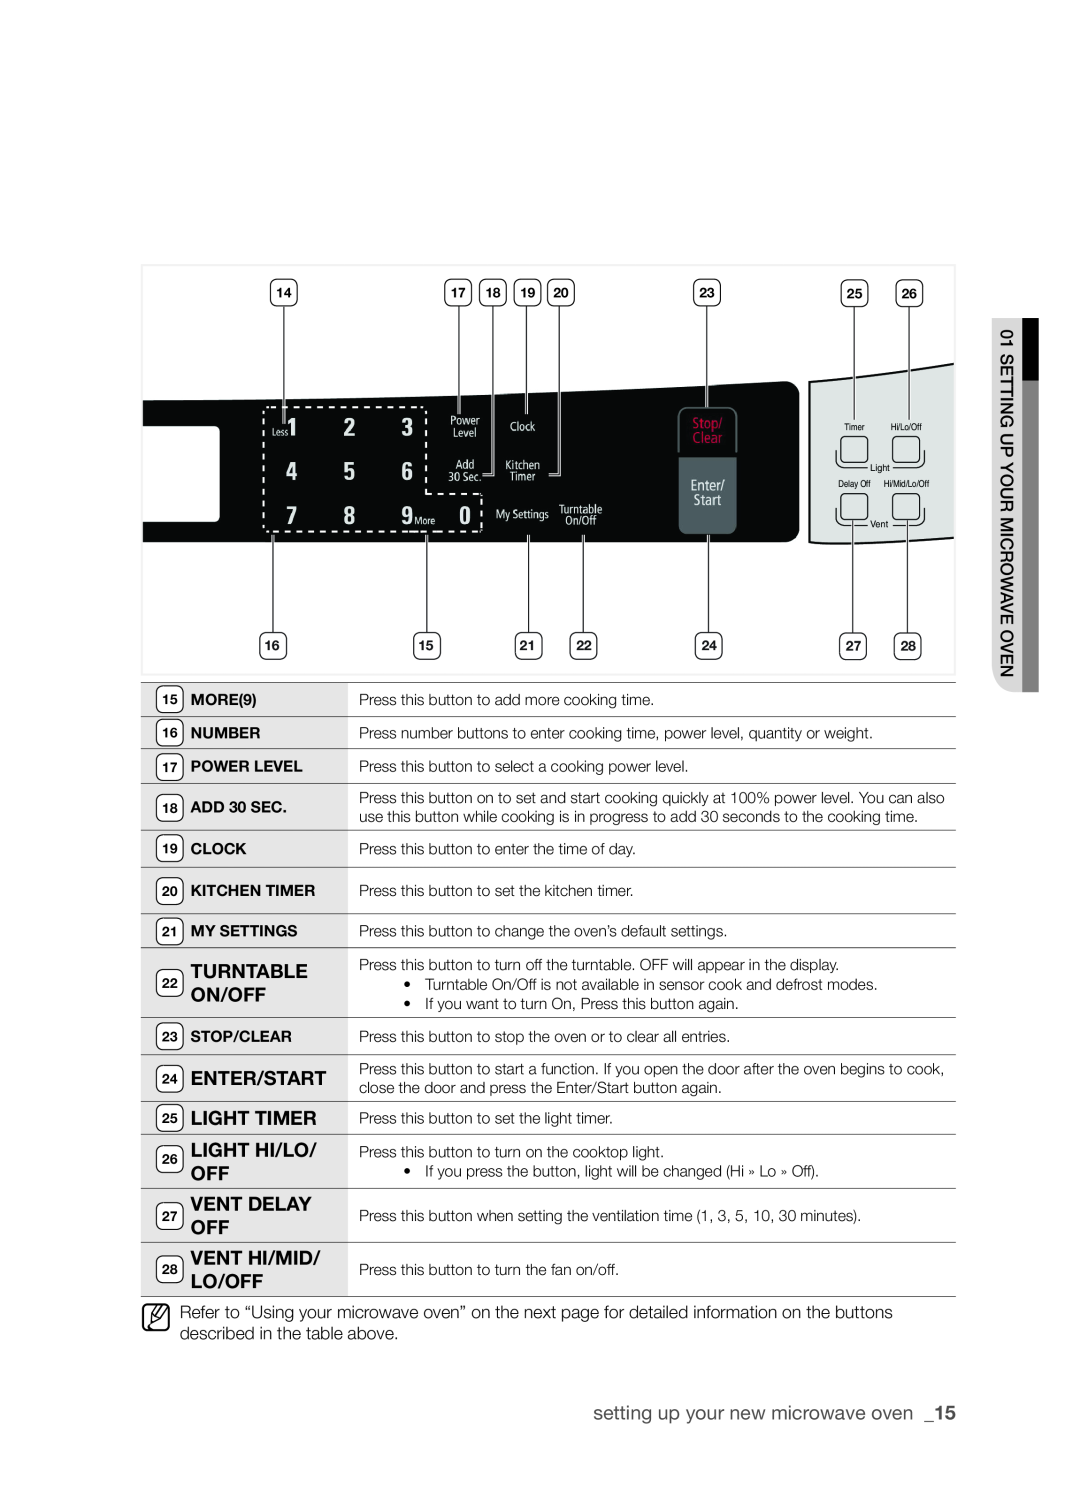 Samsung SMH9207 user manual Turntable, On/Off, Enter/Start, Light Timer, Light Hi/Lo, Vent Delay, VENT HI/Mid, Lo/Off 